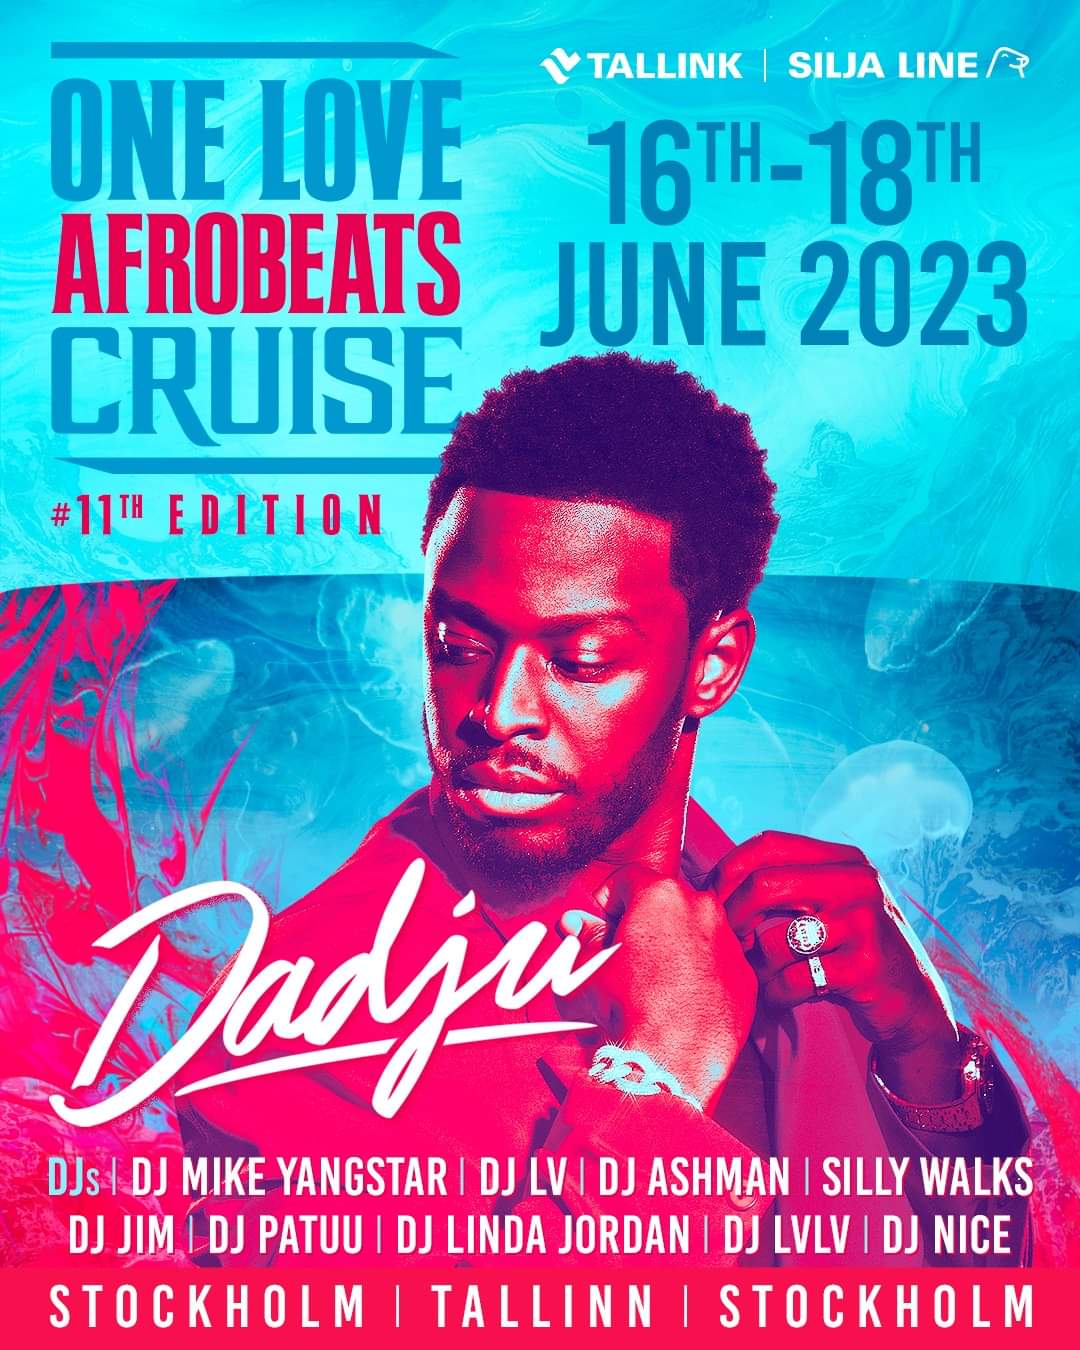 EVENEMANG! One Love Afrobeats cruise 2023! (UTSÅLT/SOLD OUT)